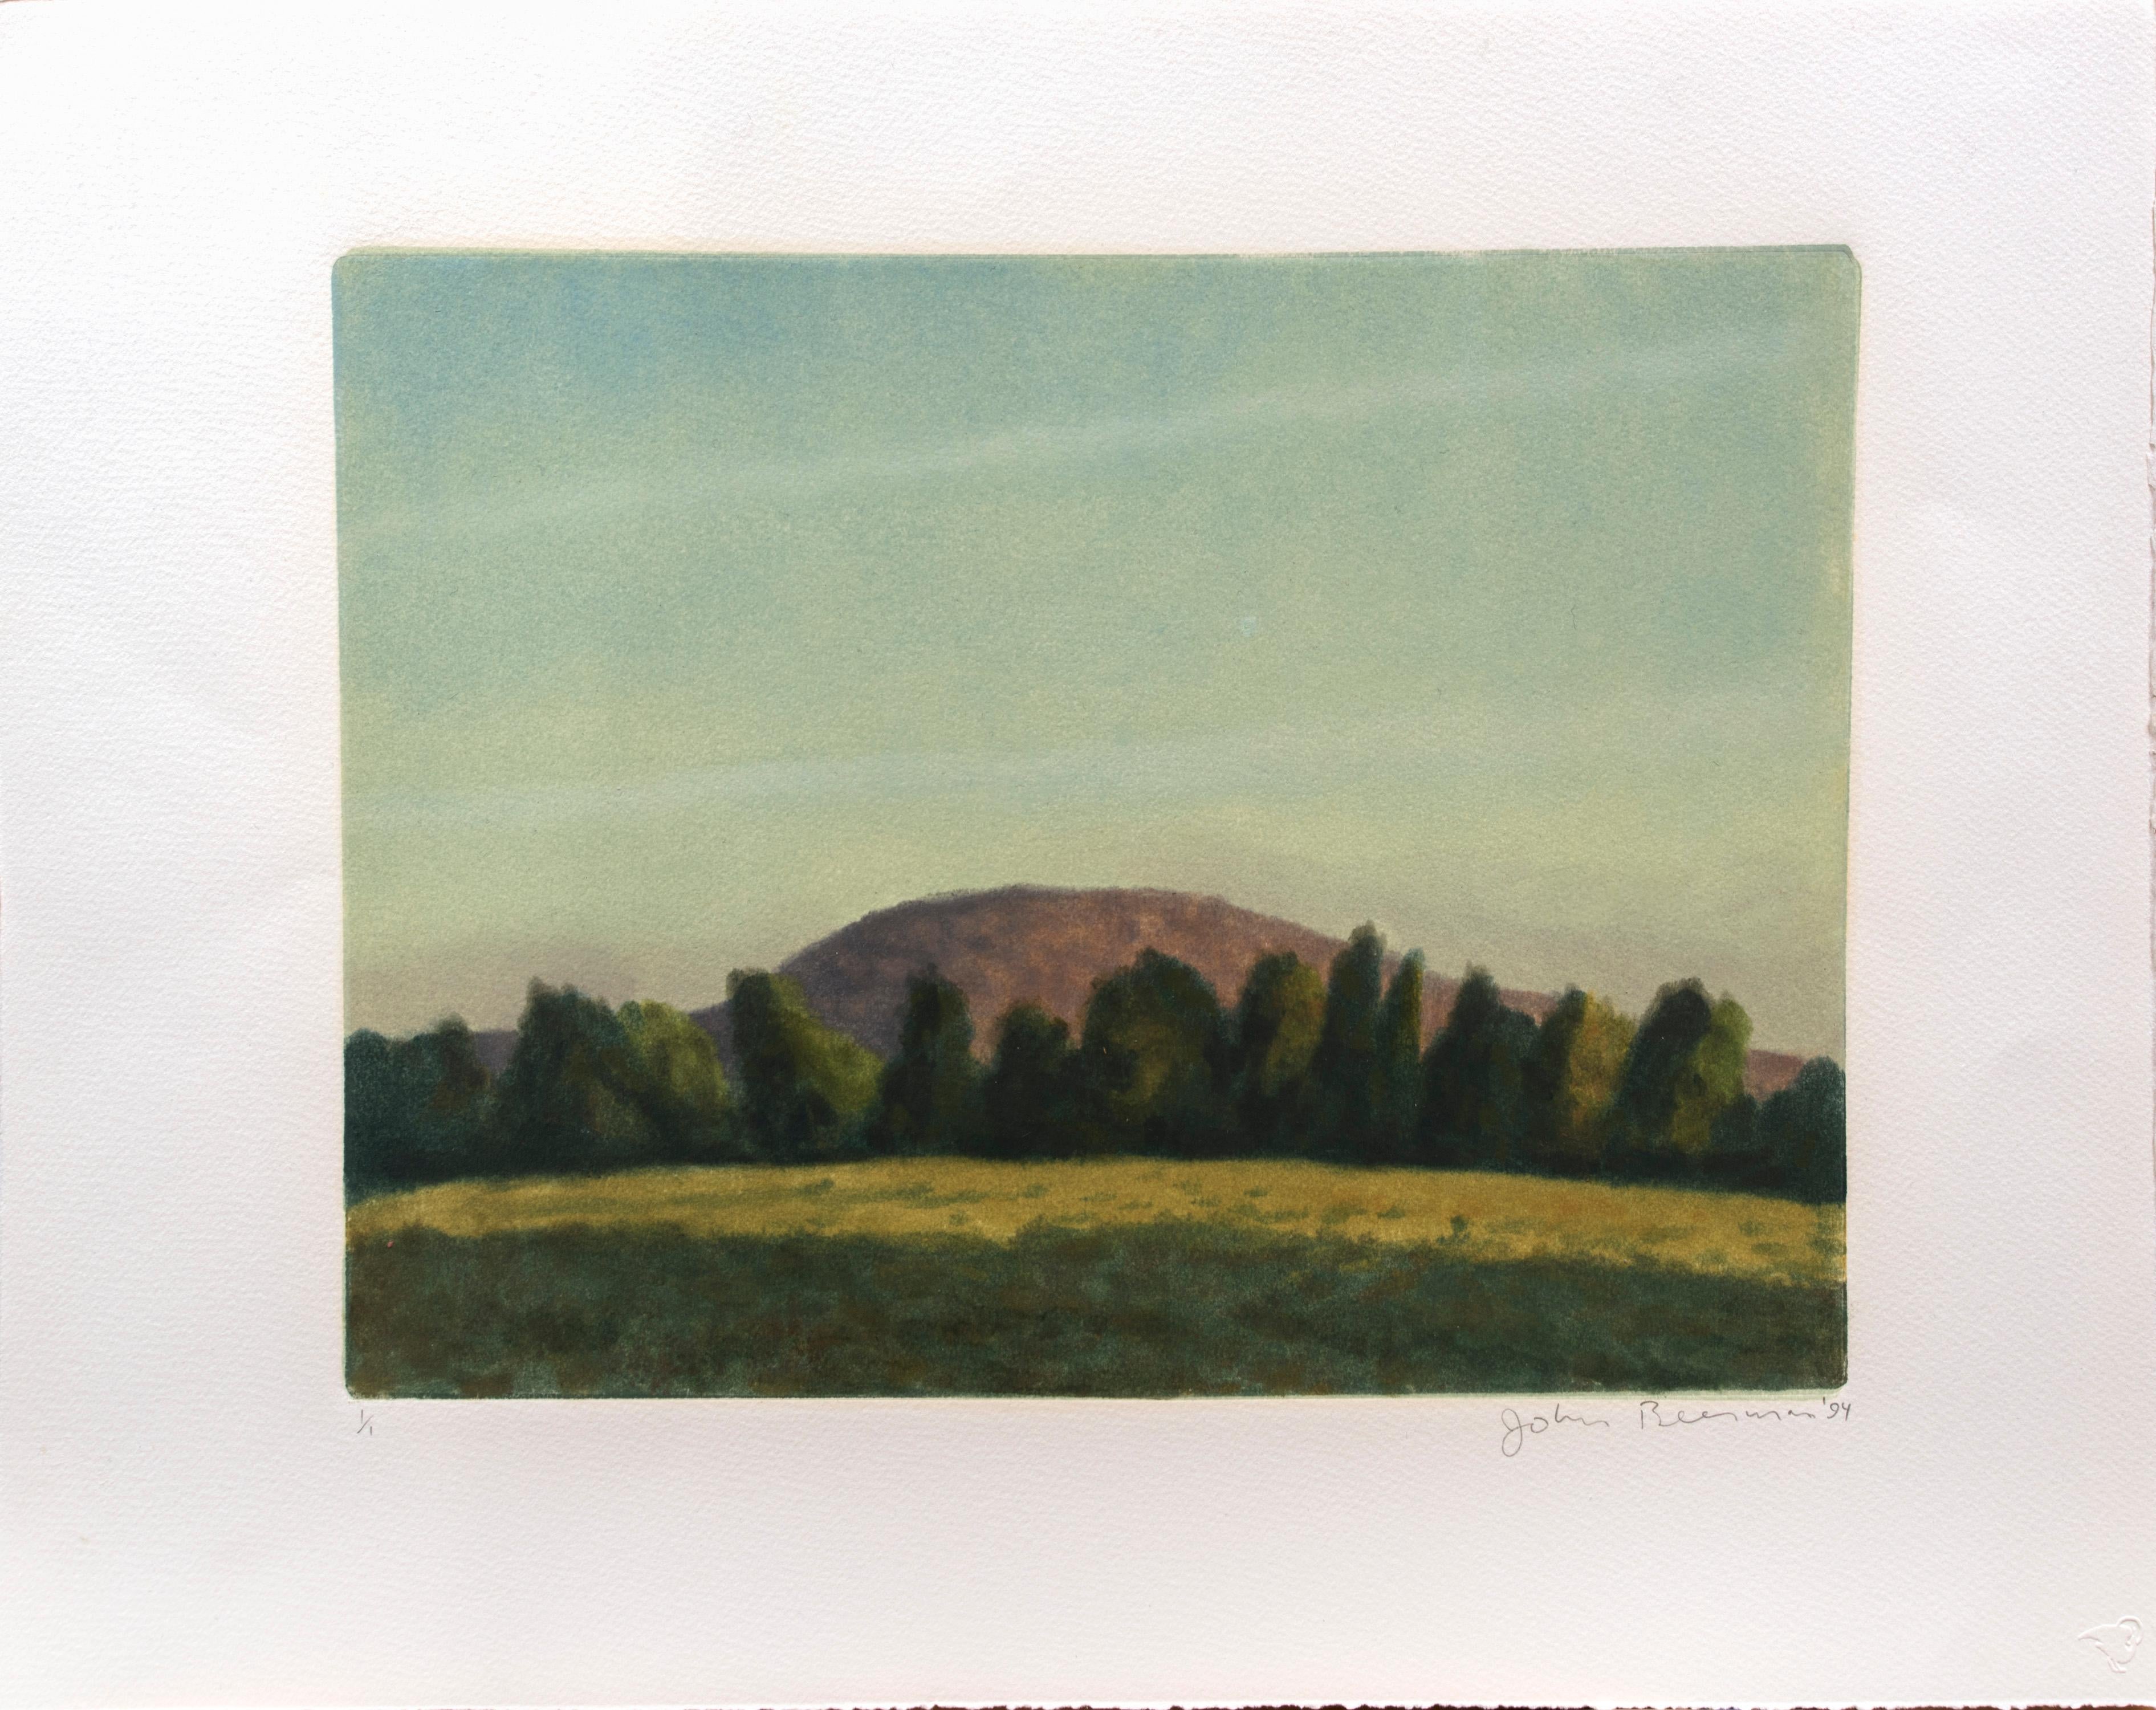 John Beerman Landscape Print - Landscape with Hill